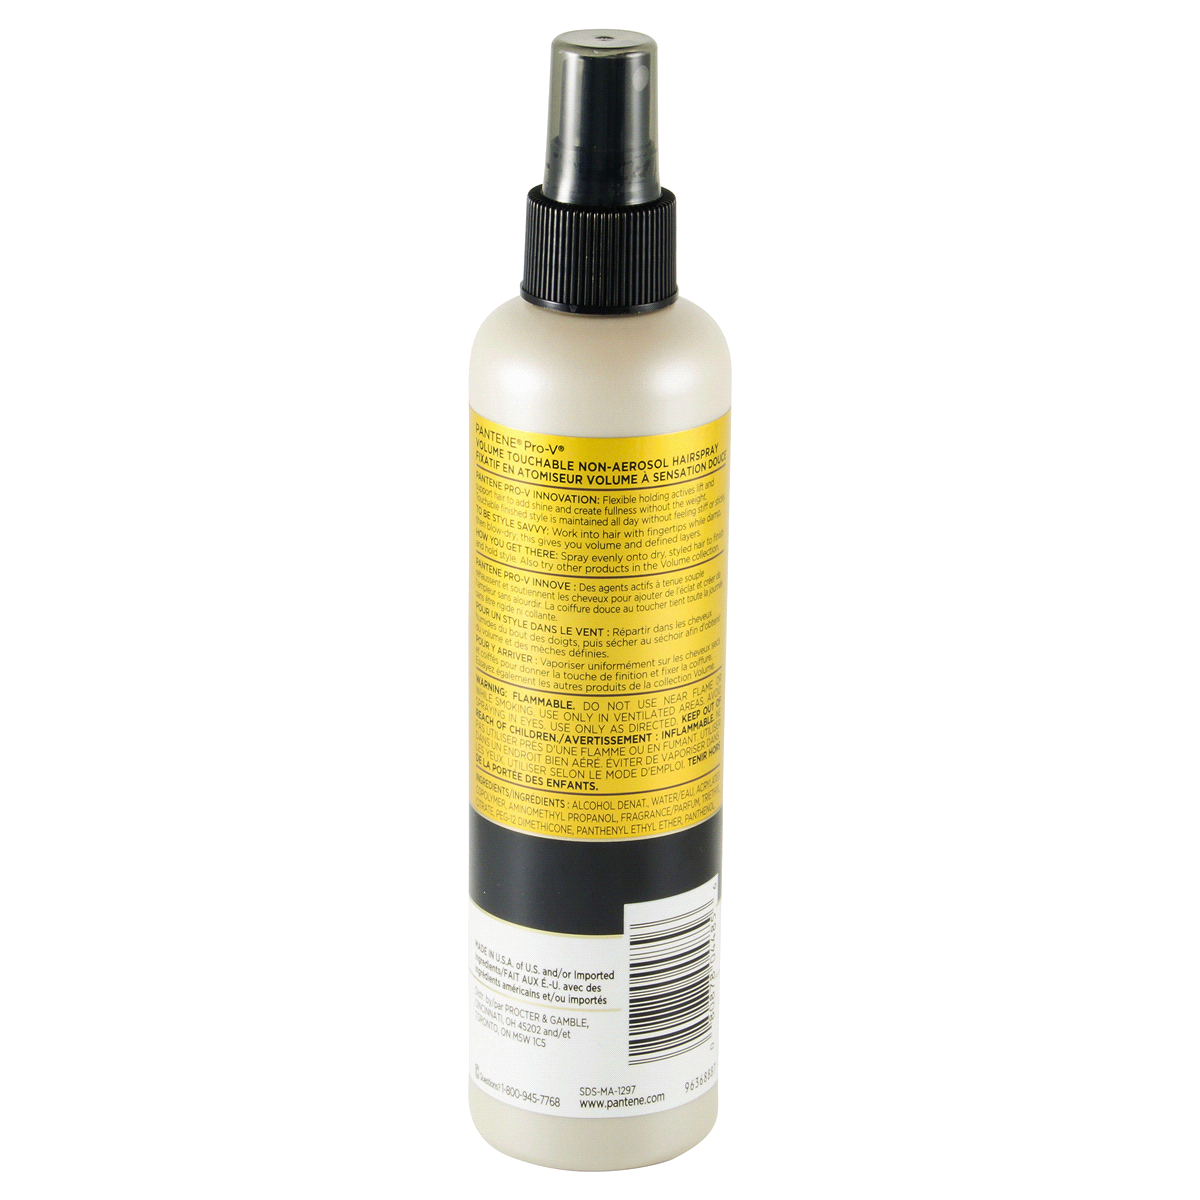 slide 55 of 95, Pantene Pro-V Volume and Texture Non-Aerosol Hair Spray - 8.5 fl oz, 8.5 fl oz